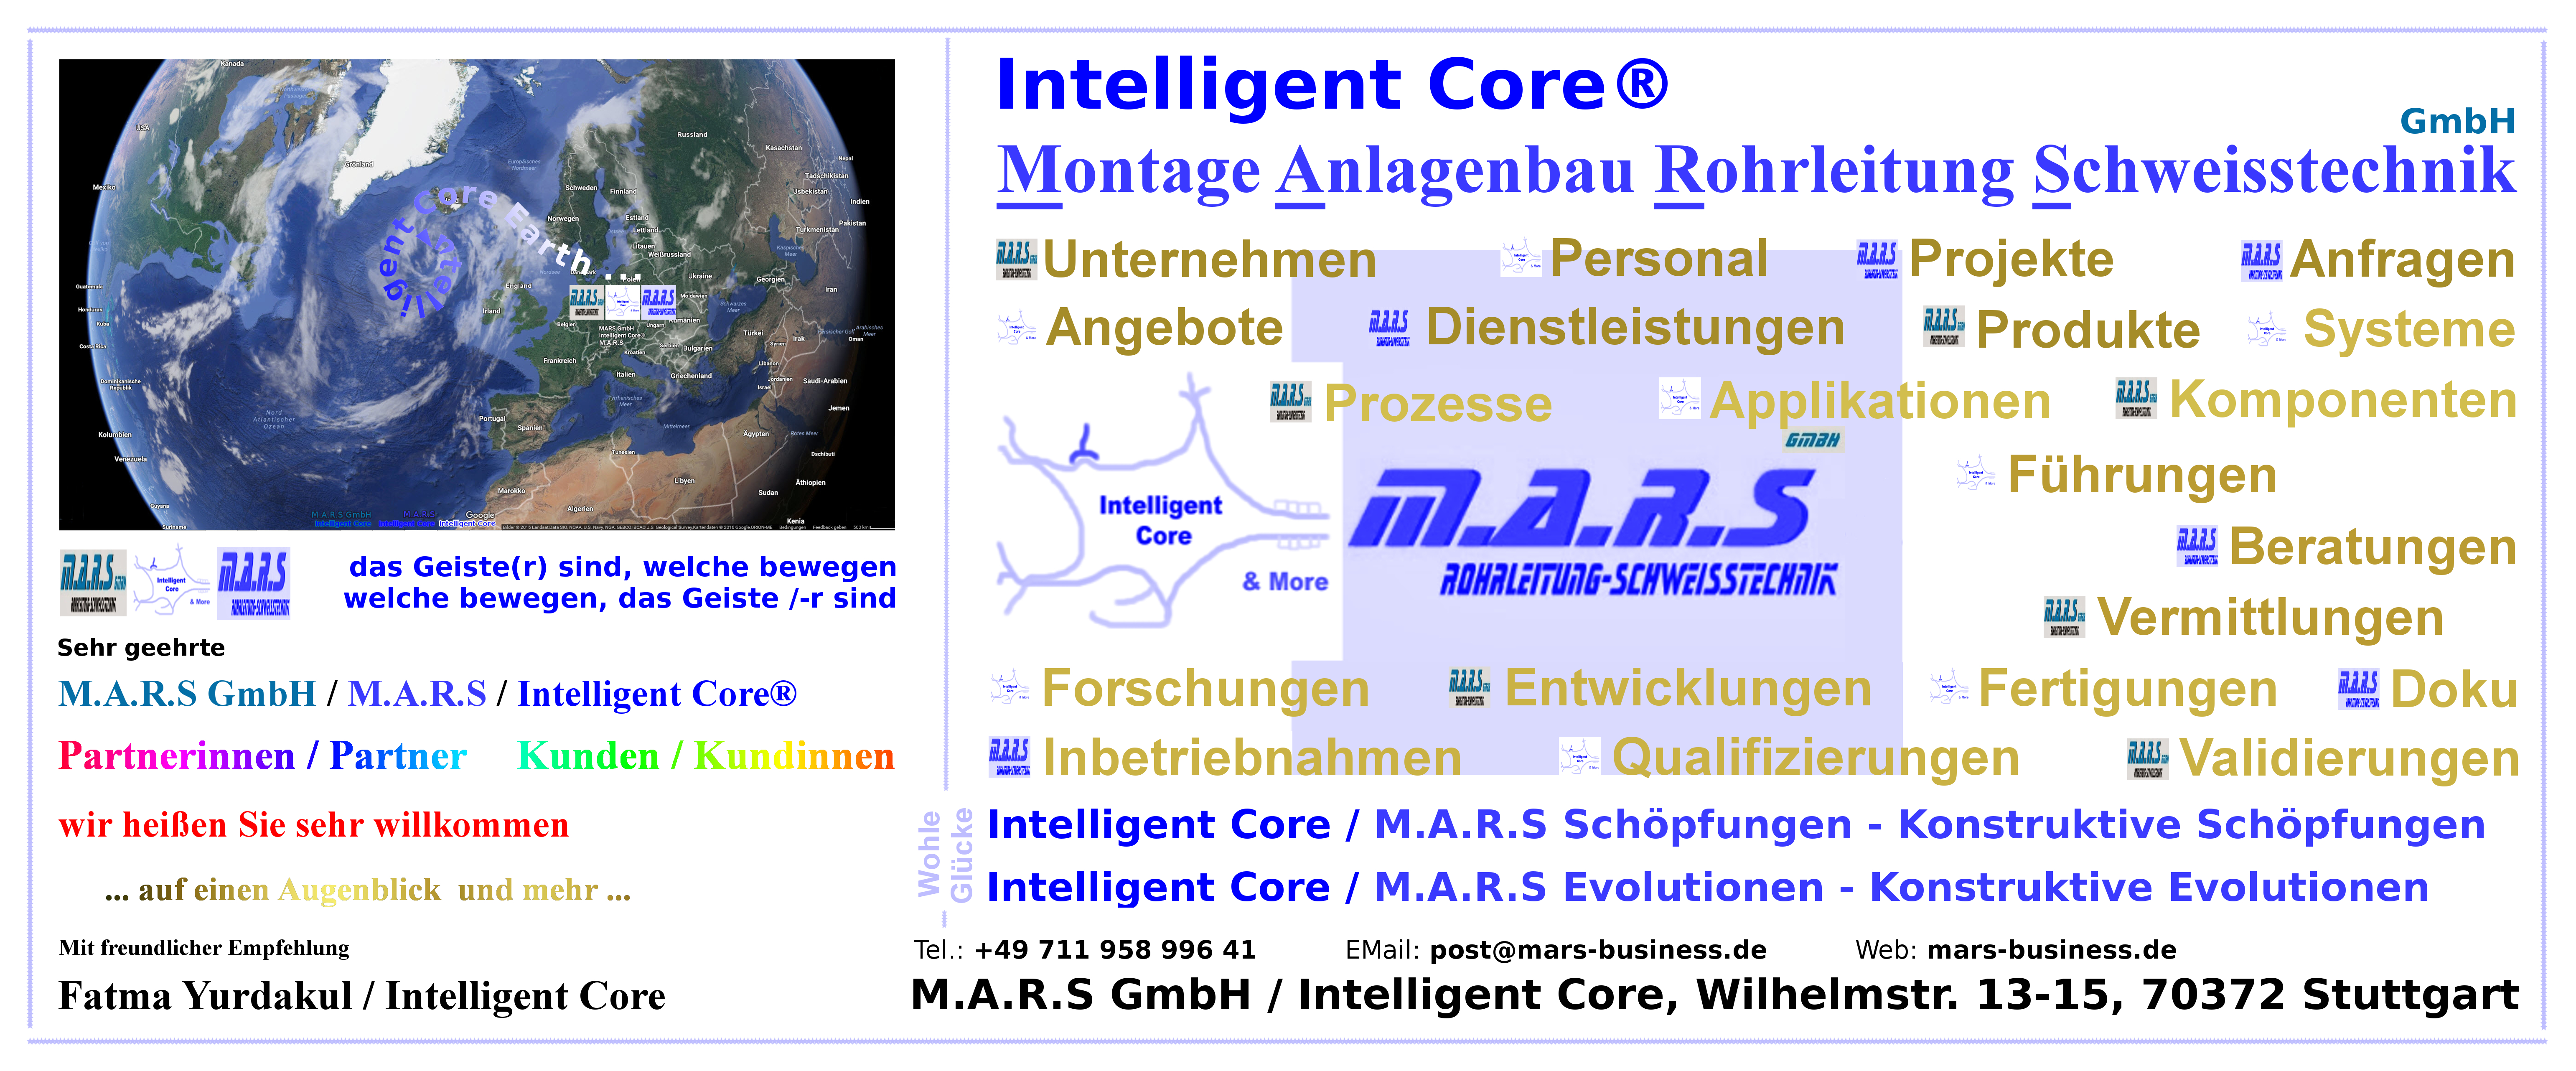 Intelligent Core® / M.A.R.S Verbund (Auszug): Intelligent Core® / M.A.R.S Schöpfungen.. Intelligent Core® / M.A.R.S Evolutionen.. Intelligent Core® / M.A.R.S Spektren.. Intelligent Core® Fatma Yurdakul.. Intelligent Core® Clemens Kaltenbach.. Intel..